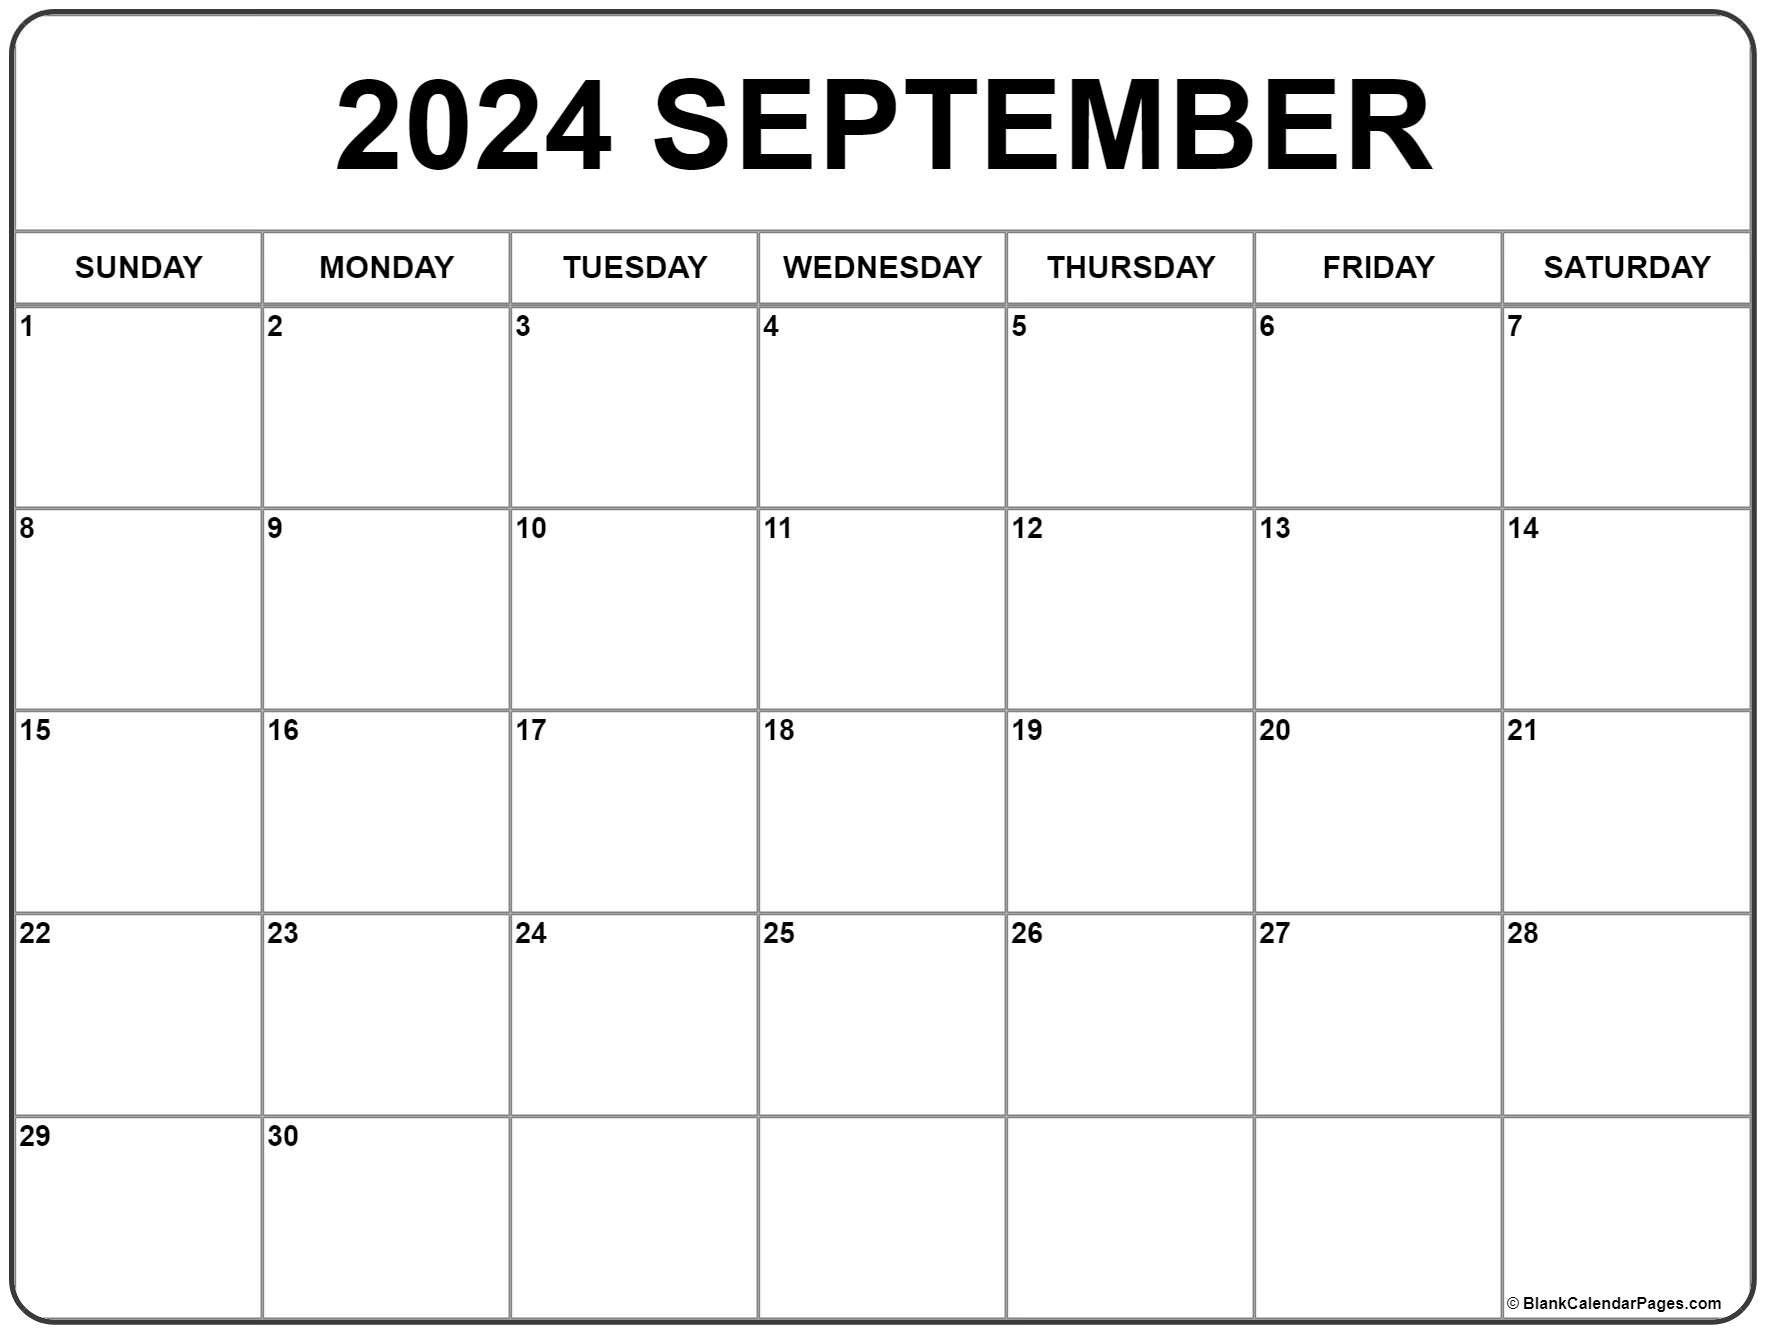 September 2022 Holiday Calendar September 2022 Calendar | Free Printable Calendar Templates